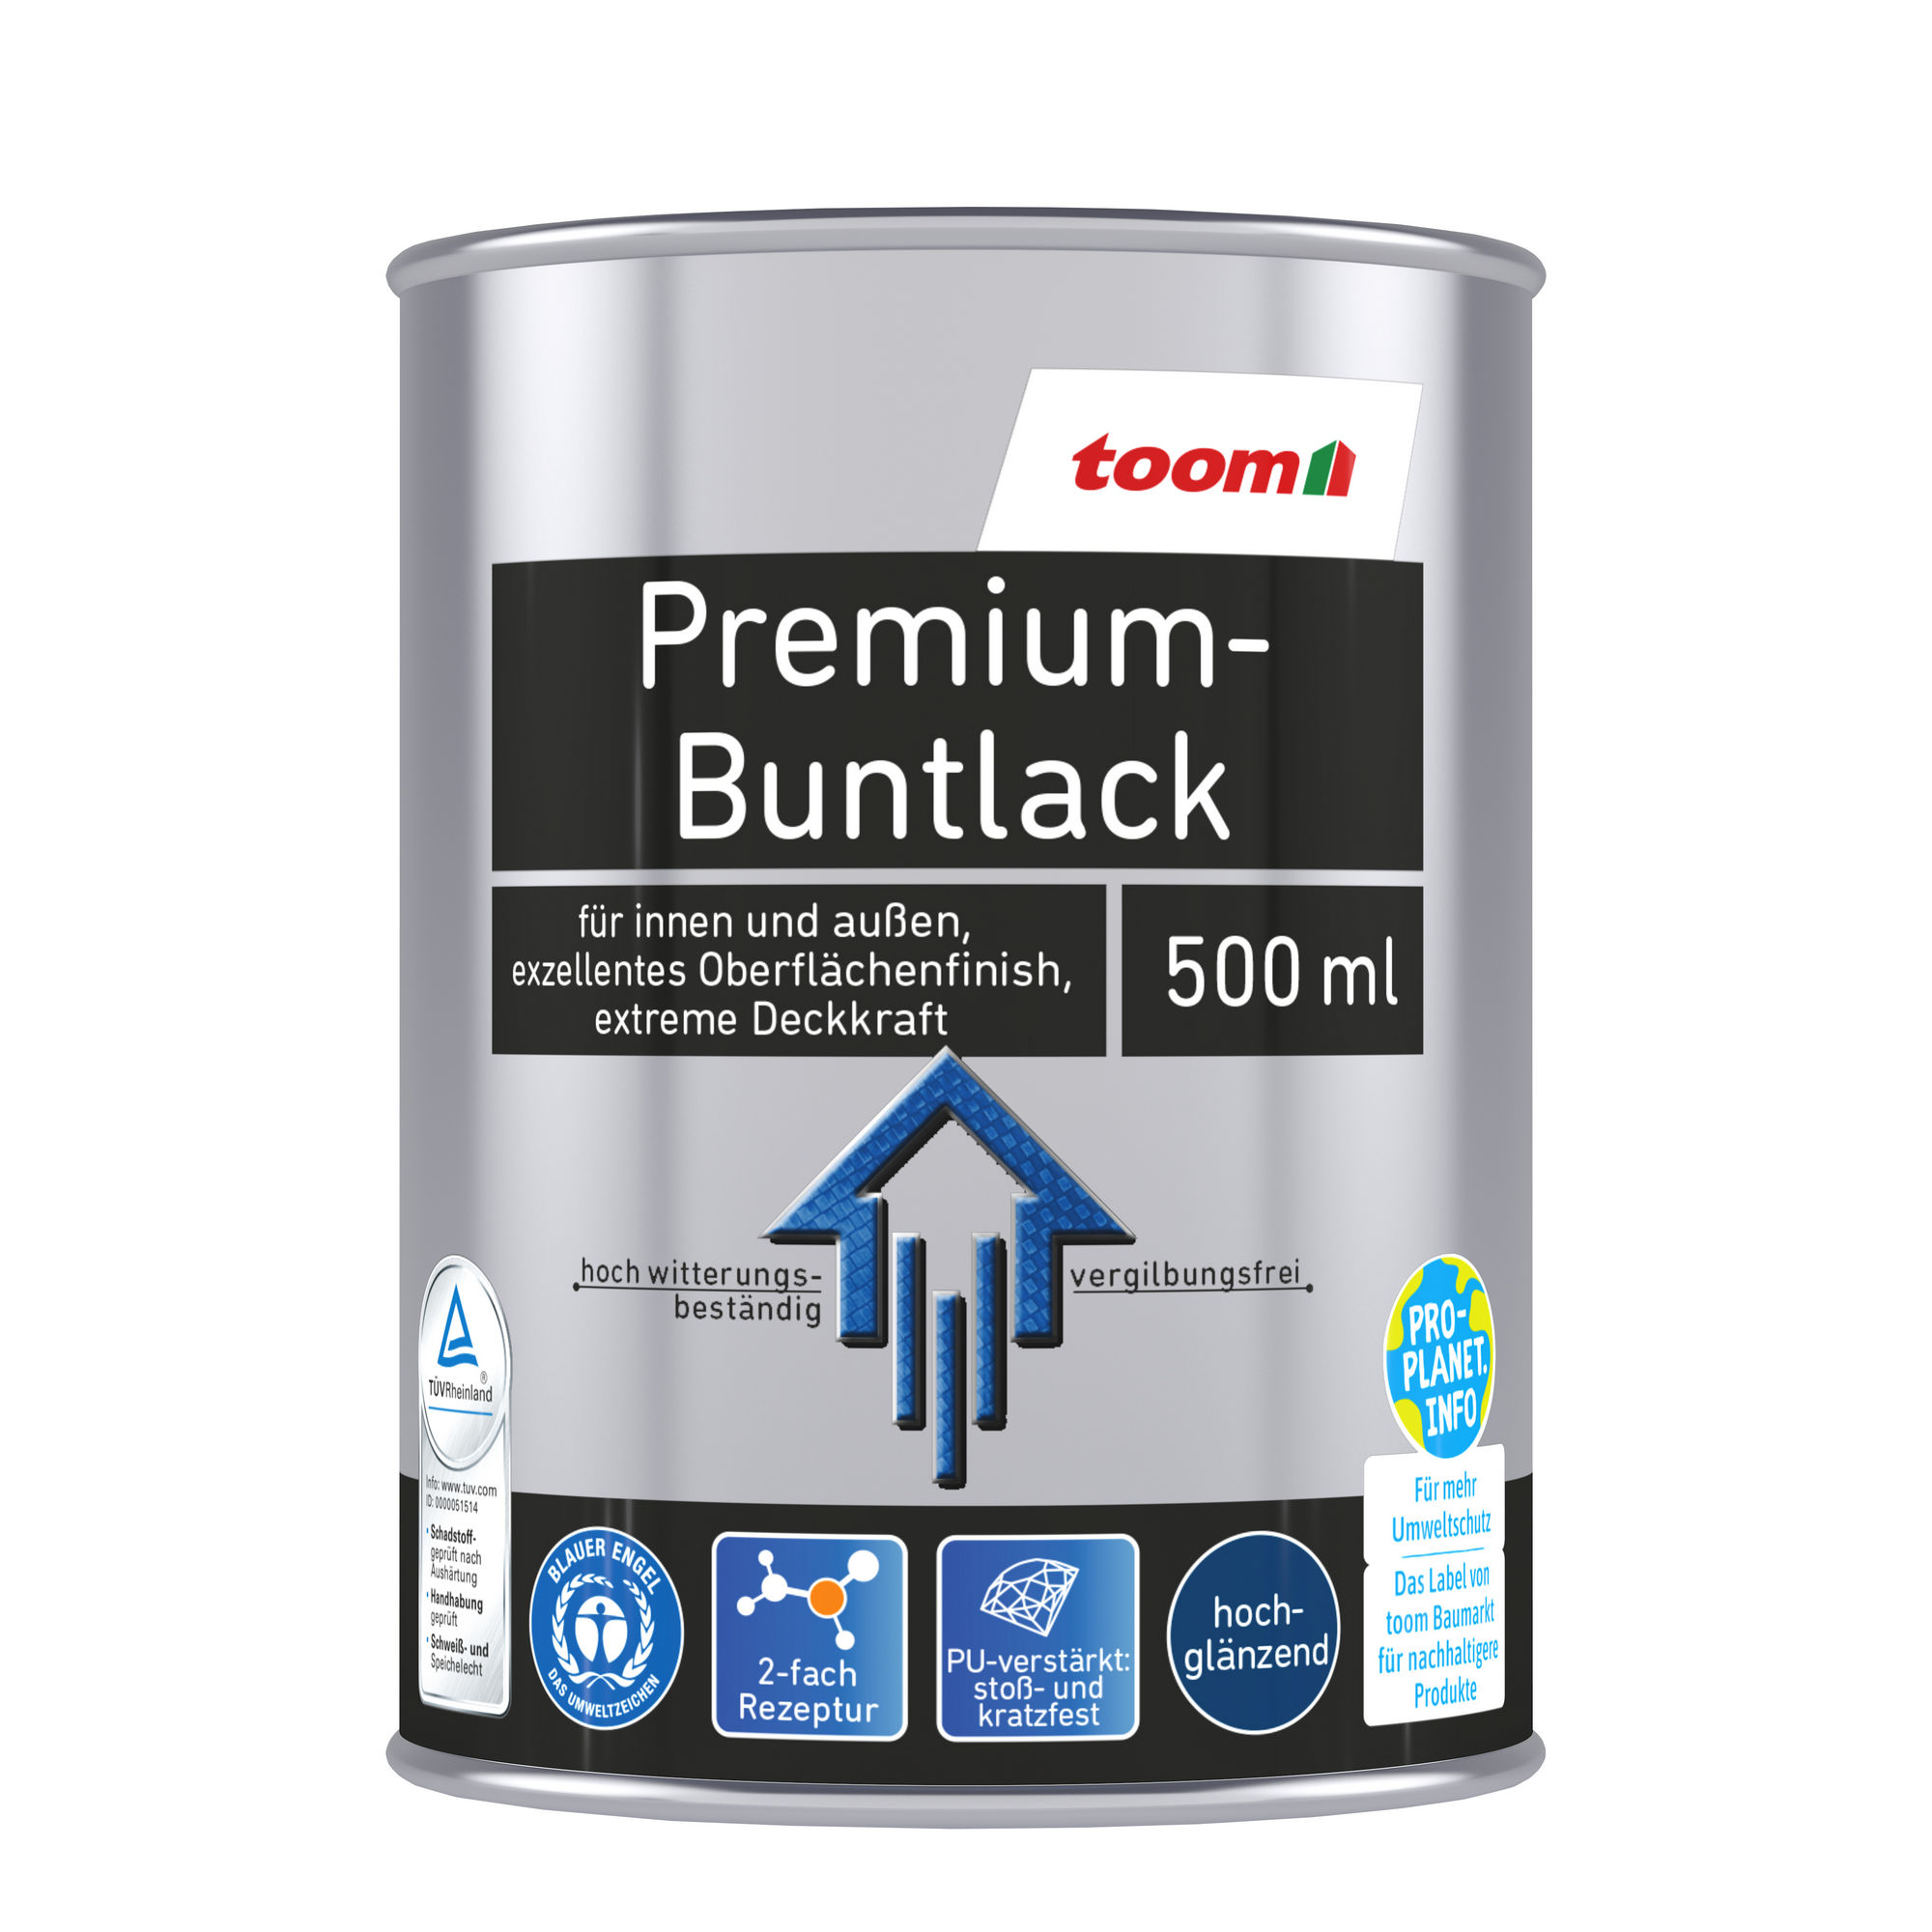 toom Premium-Buntlack nussbraun glänzend 500 ml